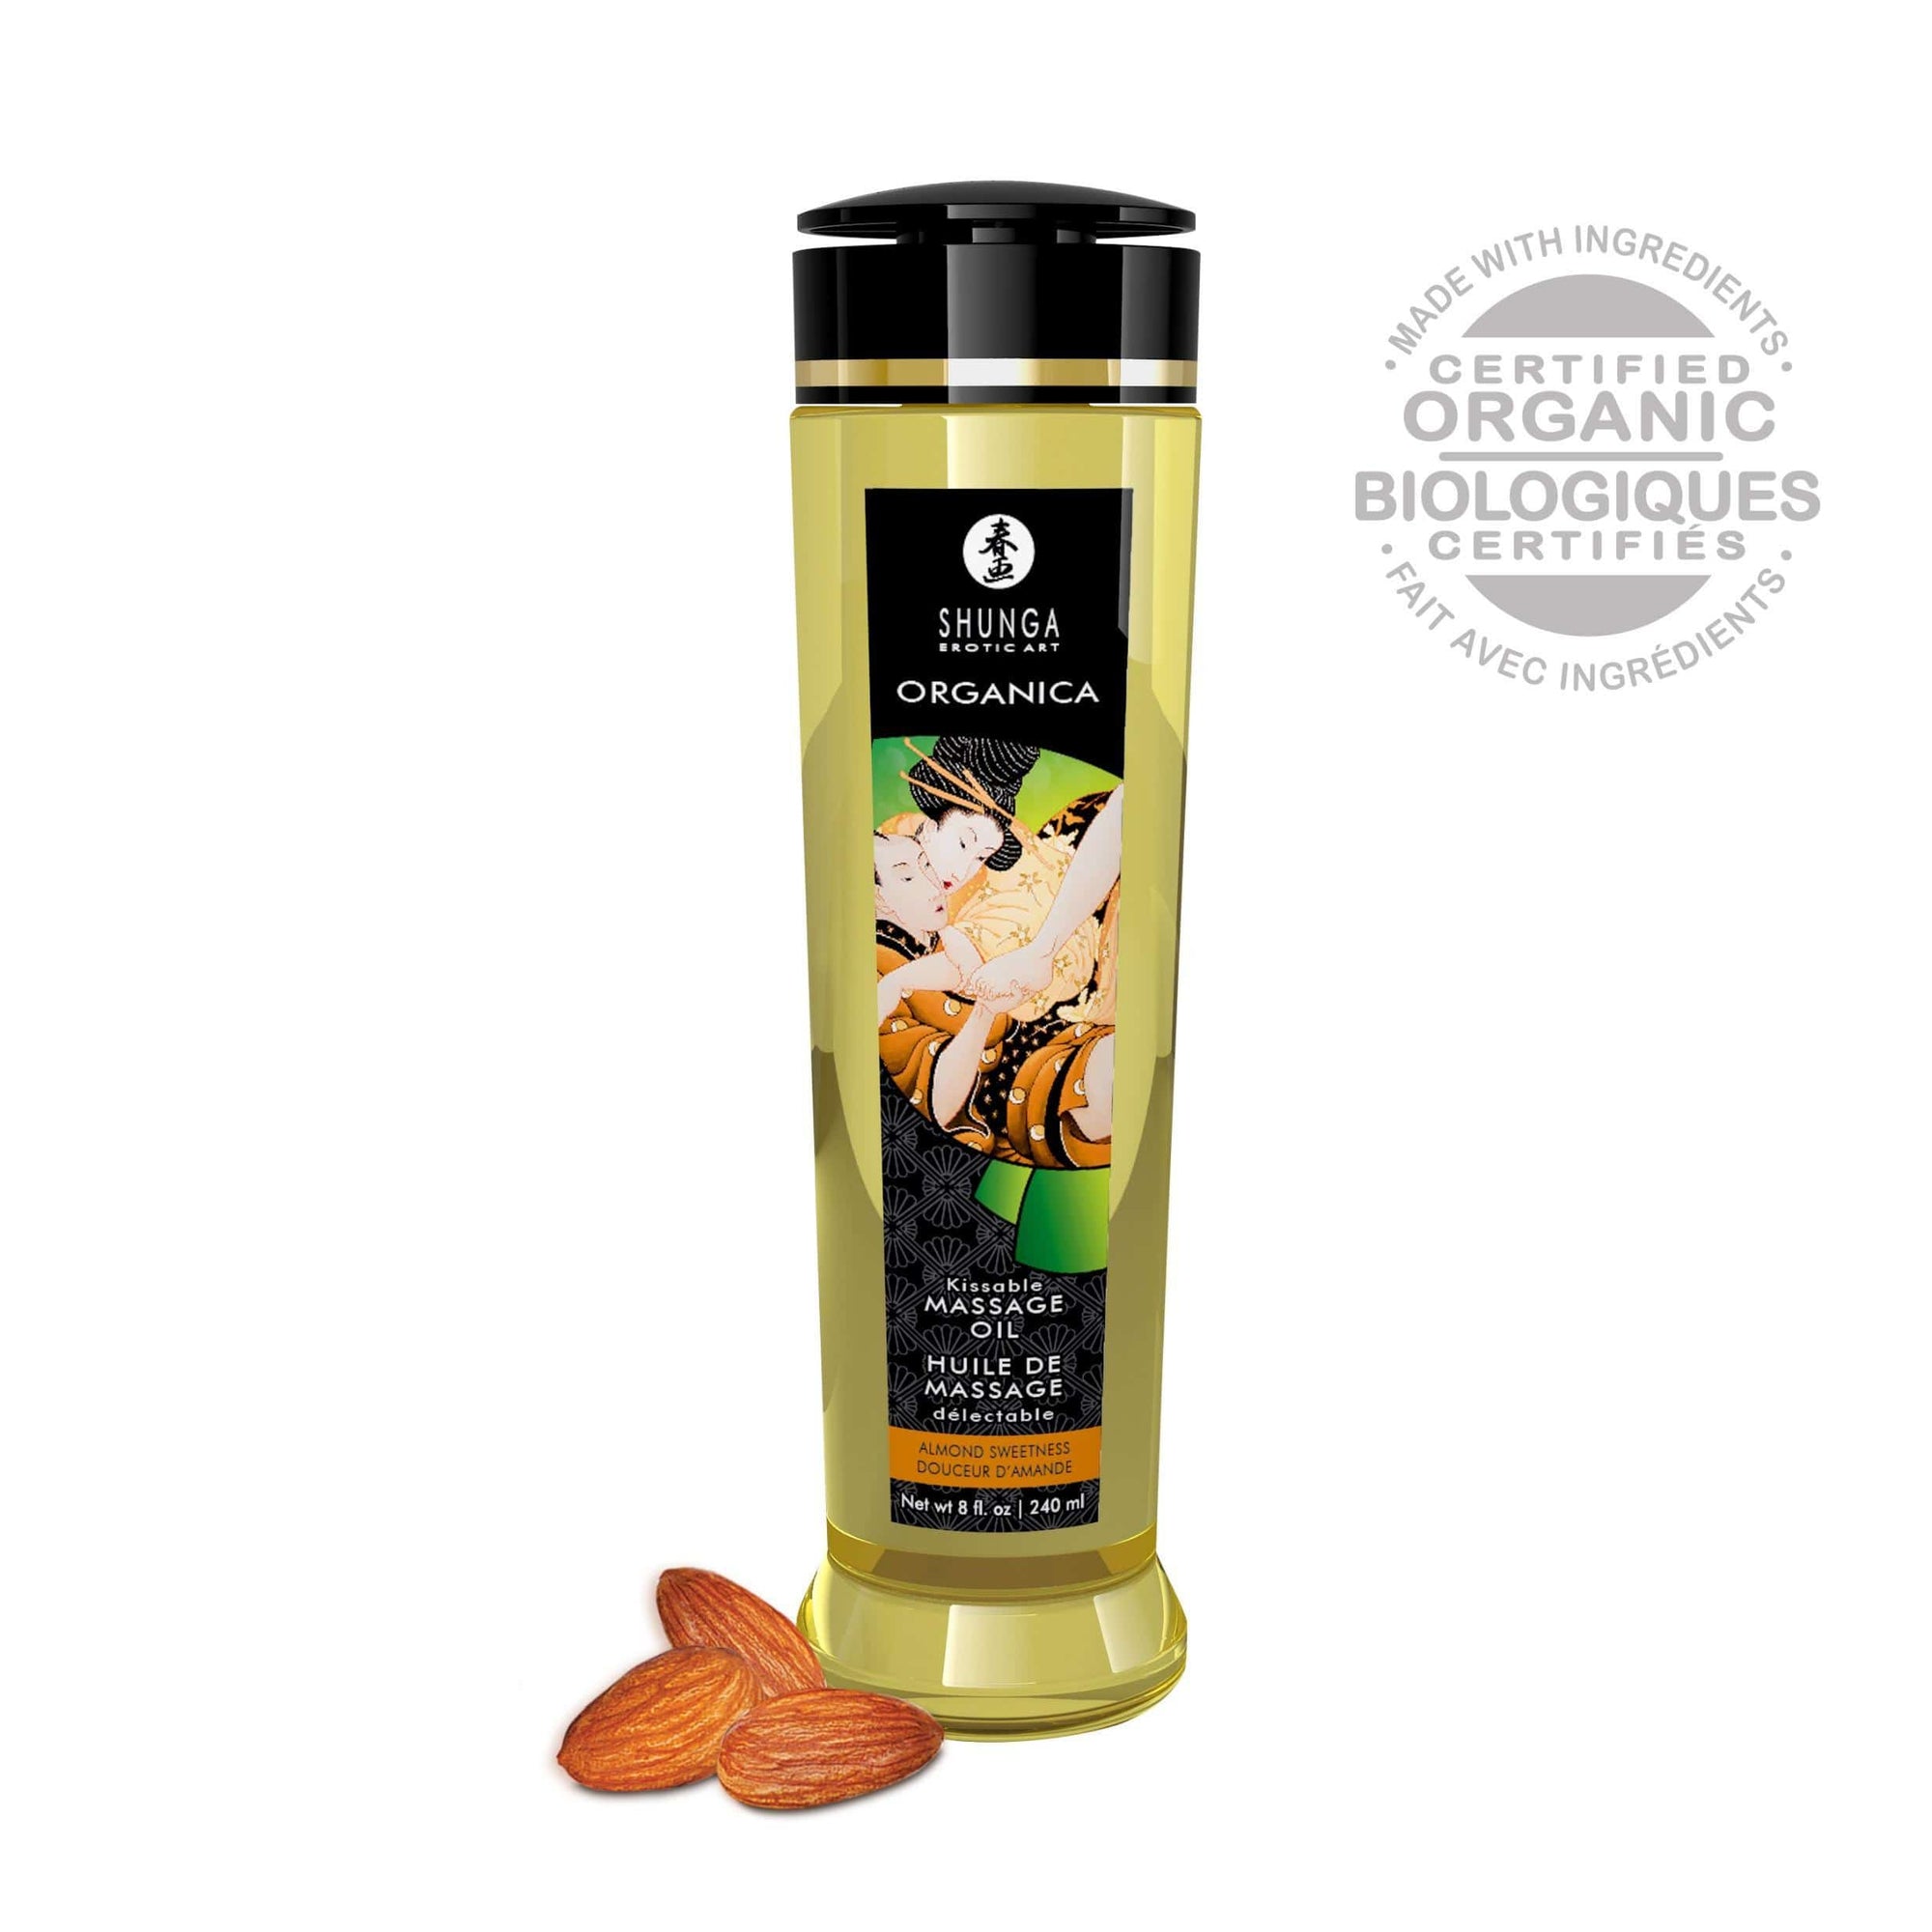 organica massage oils almond sweetness 8 fl oz